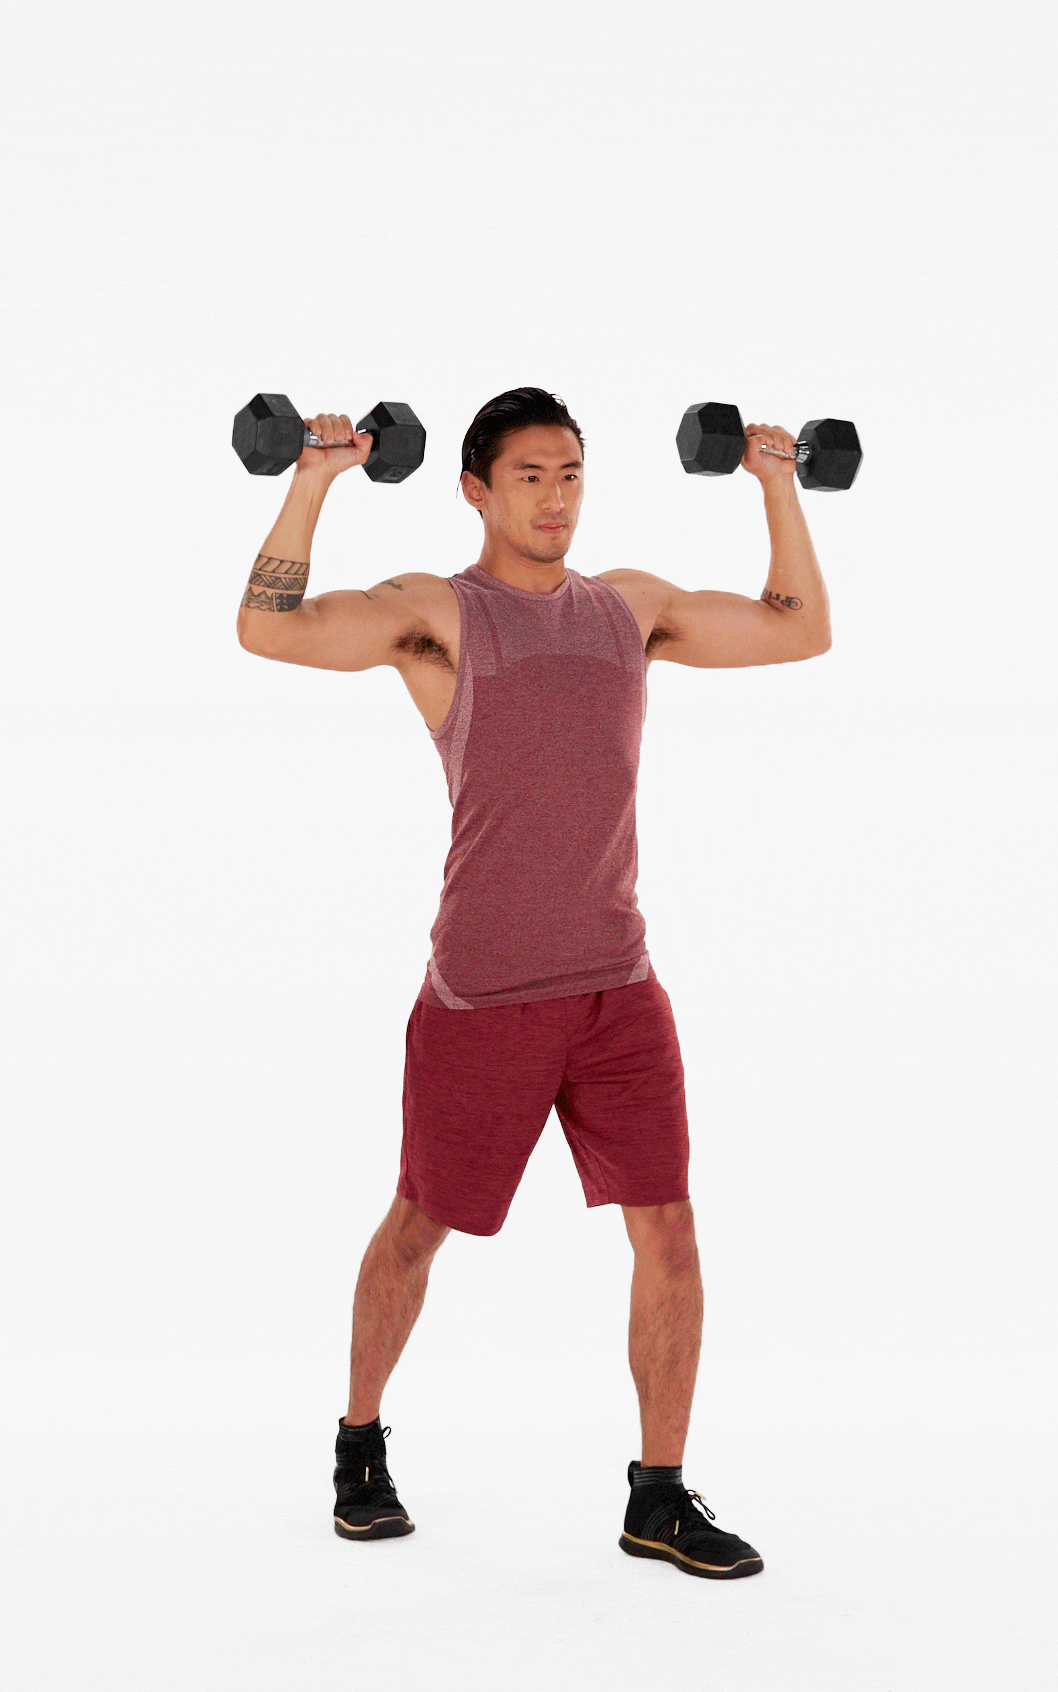 callahan press | shoulder workouts